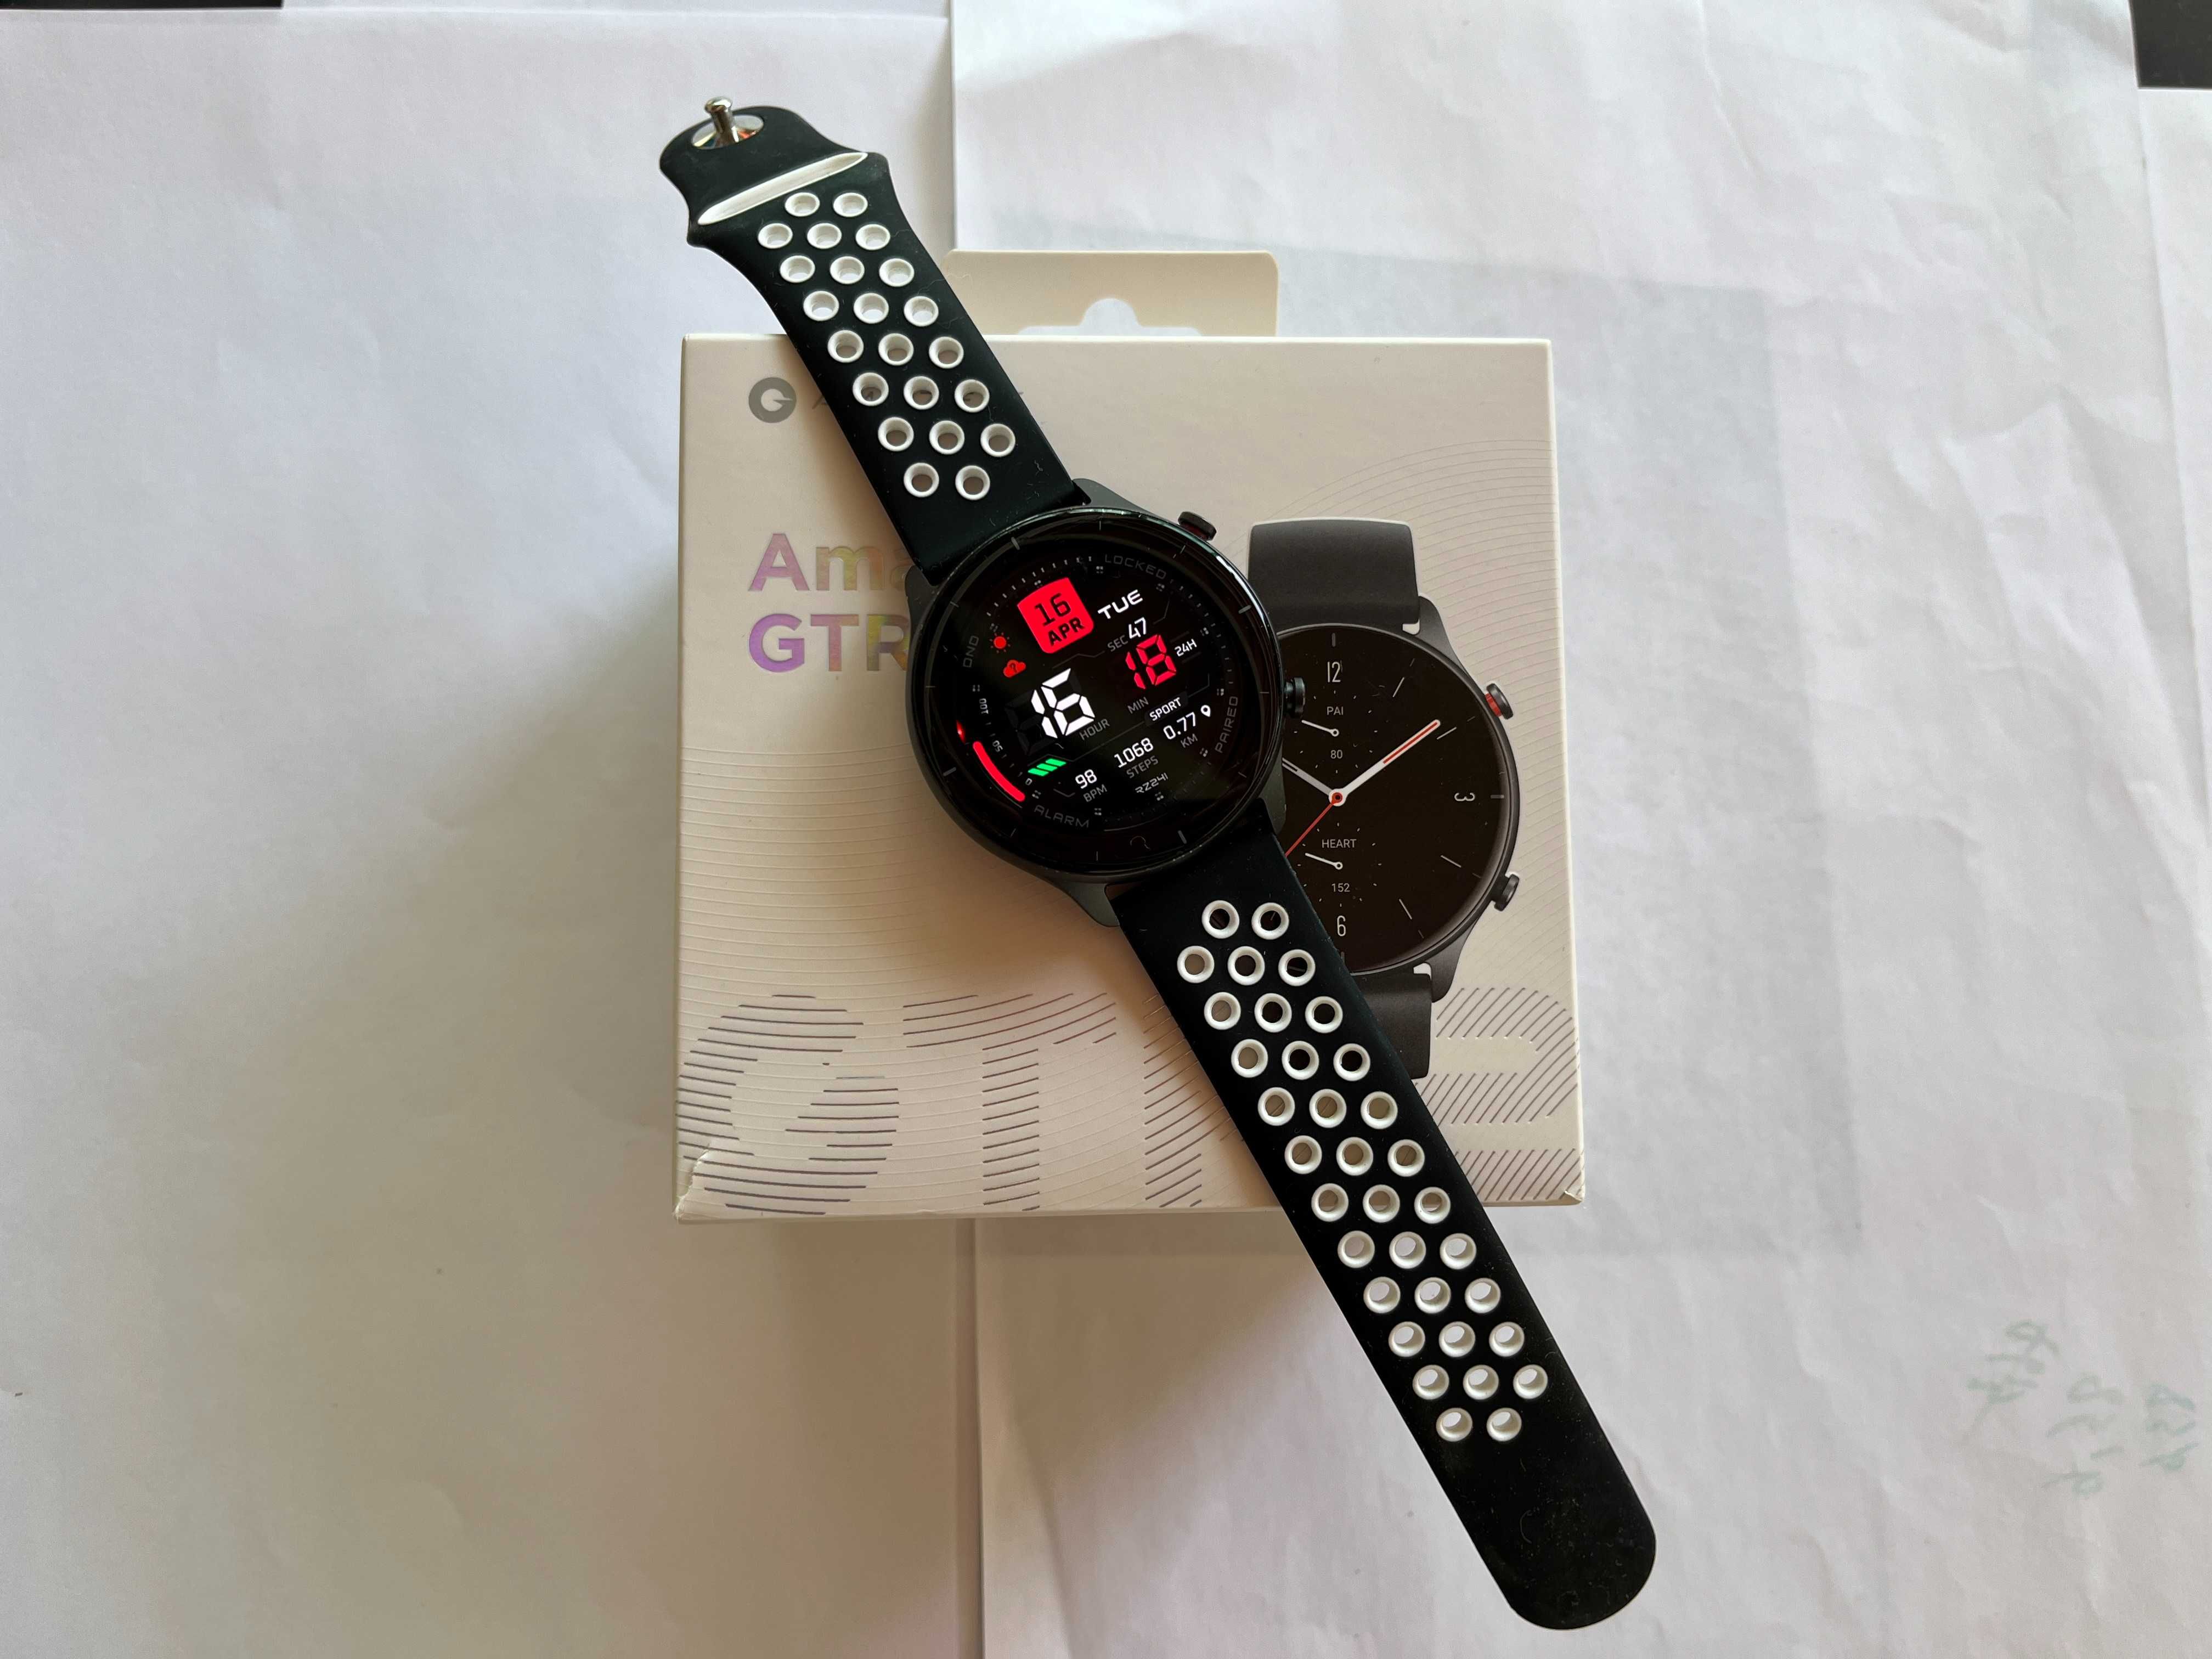 Smartwatch Amazfit GTR 2e